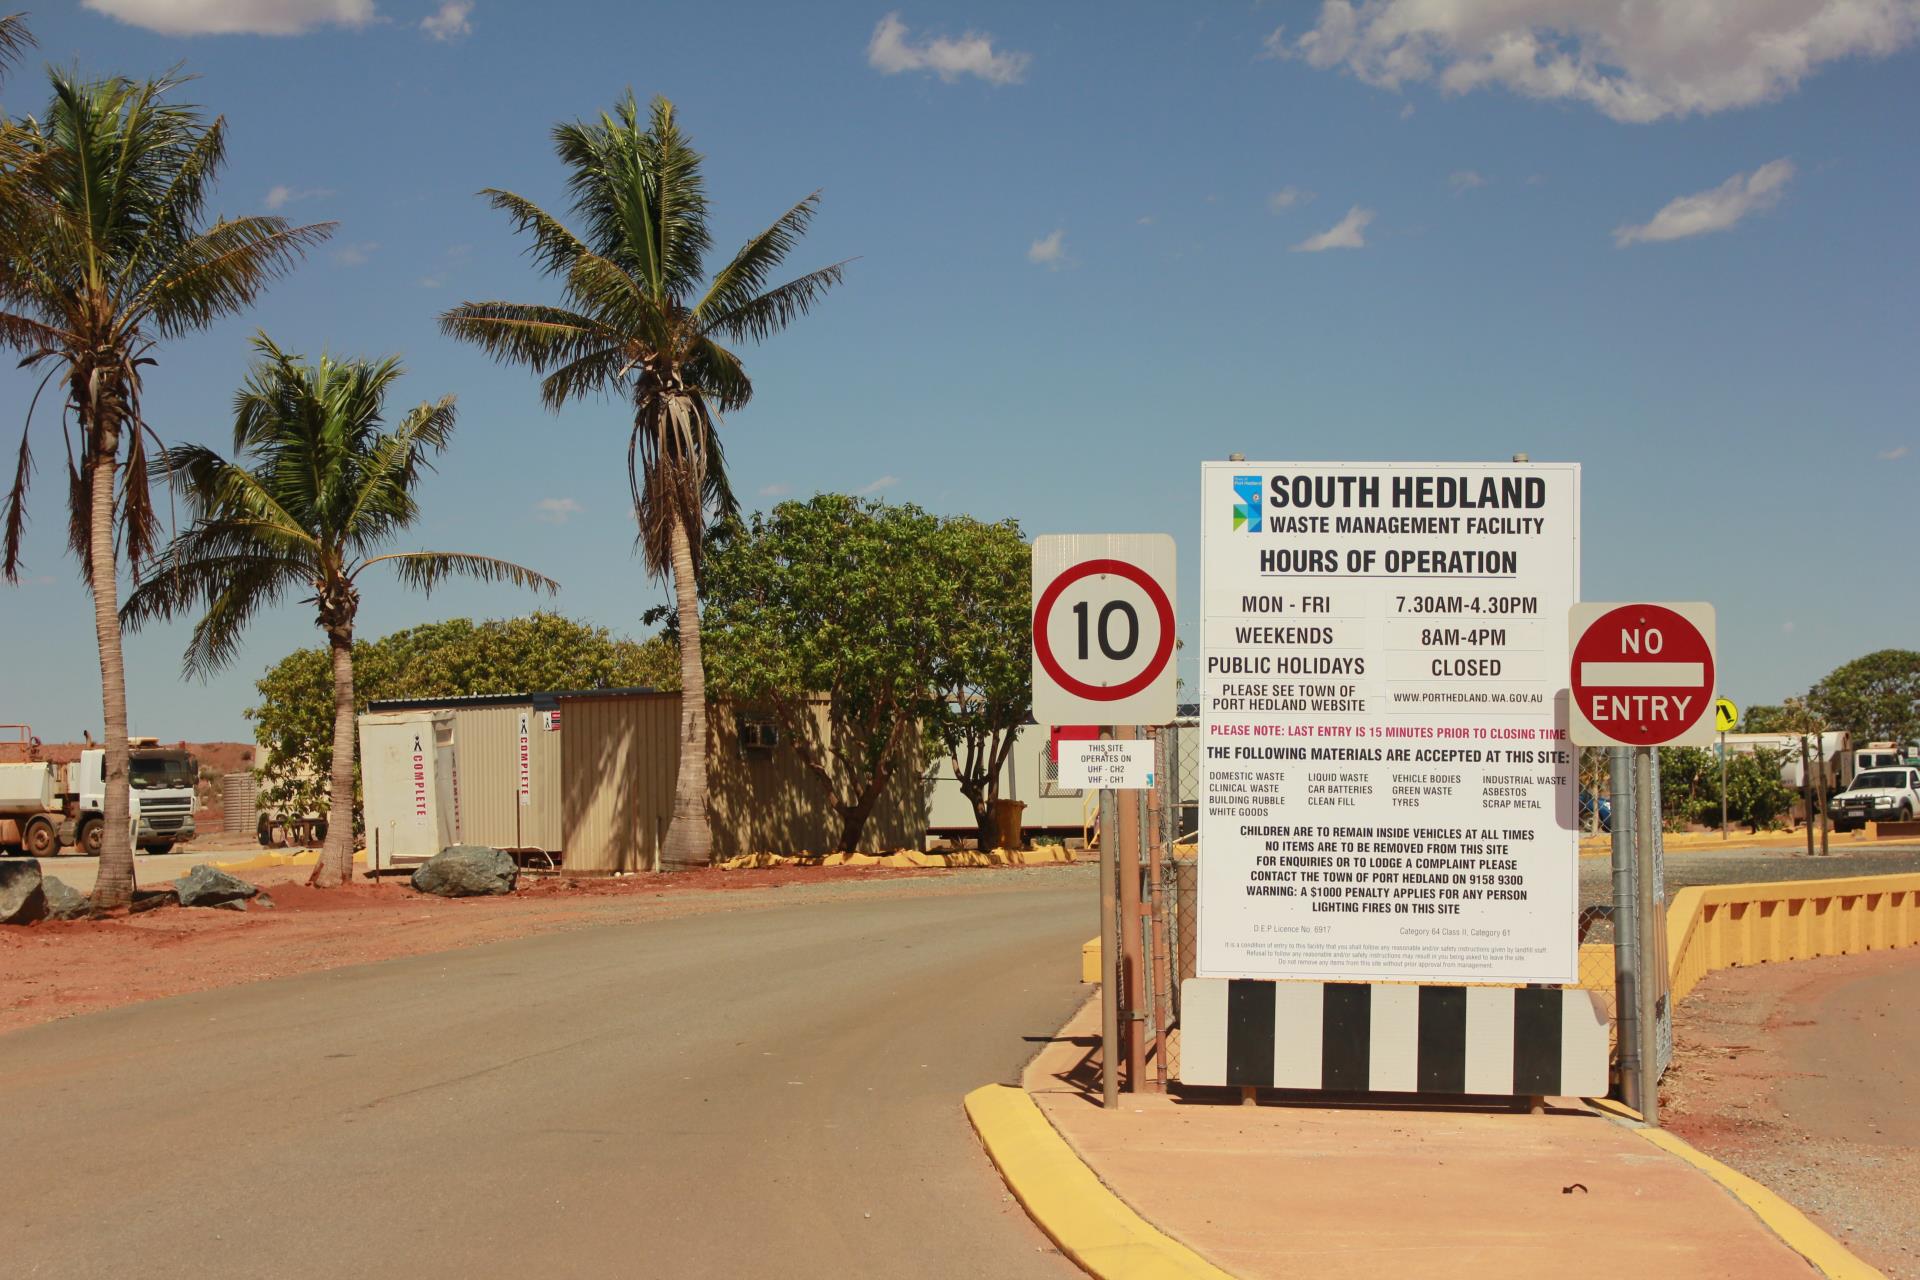 South Hedland Landfill to open Sundays